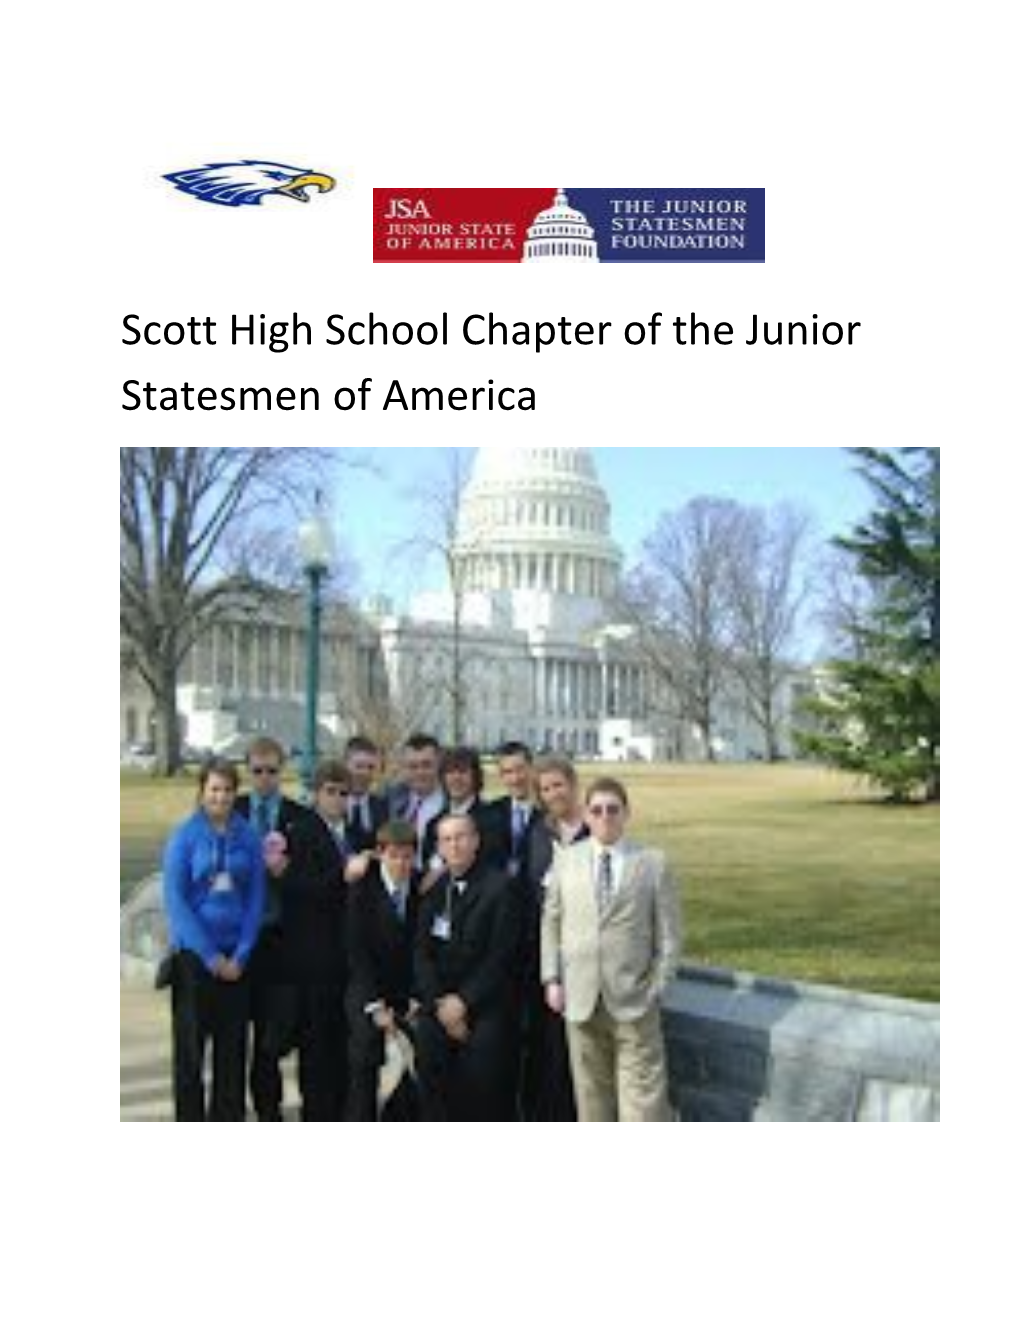 Scott High School Chapter of the Junior Statesmen of America